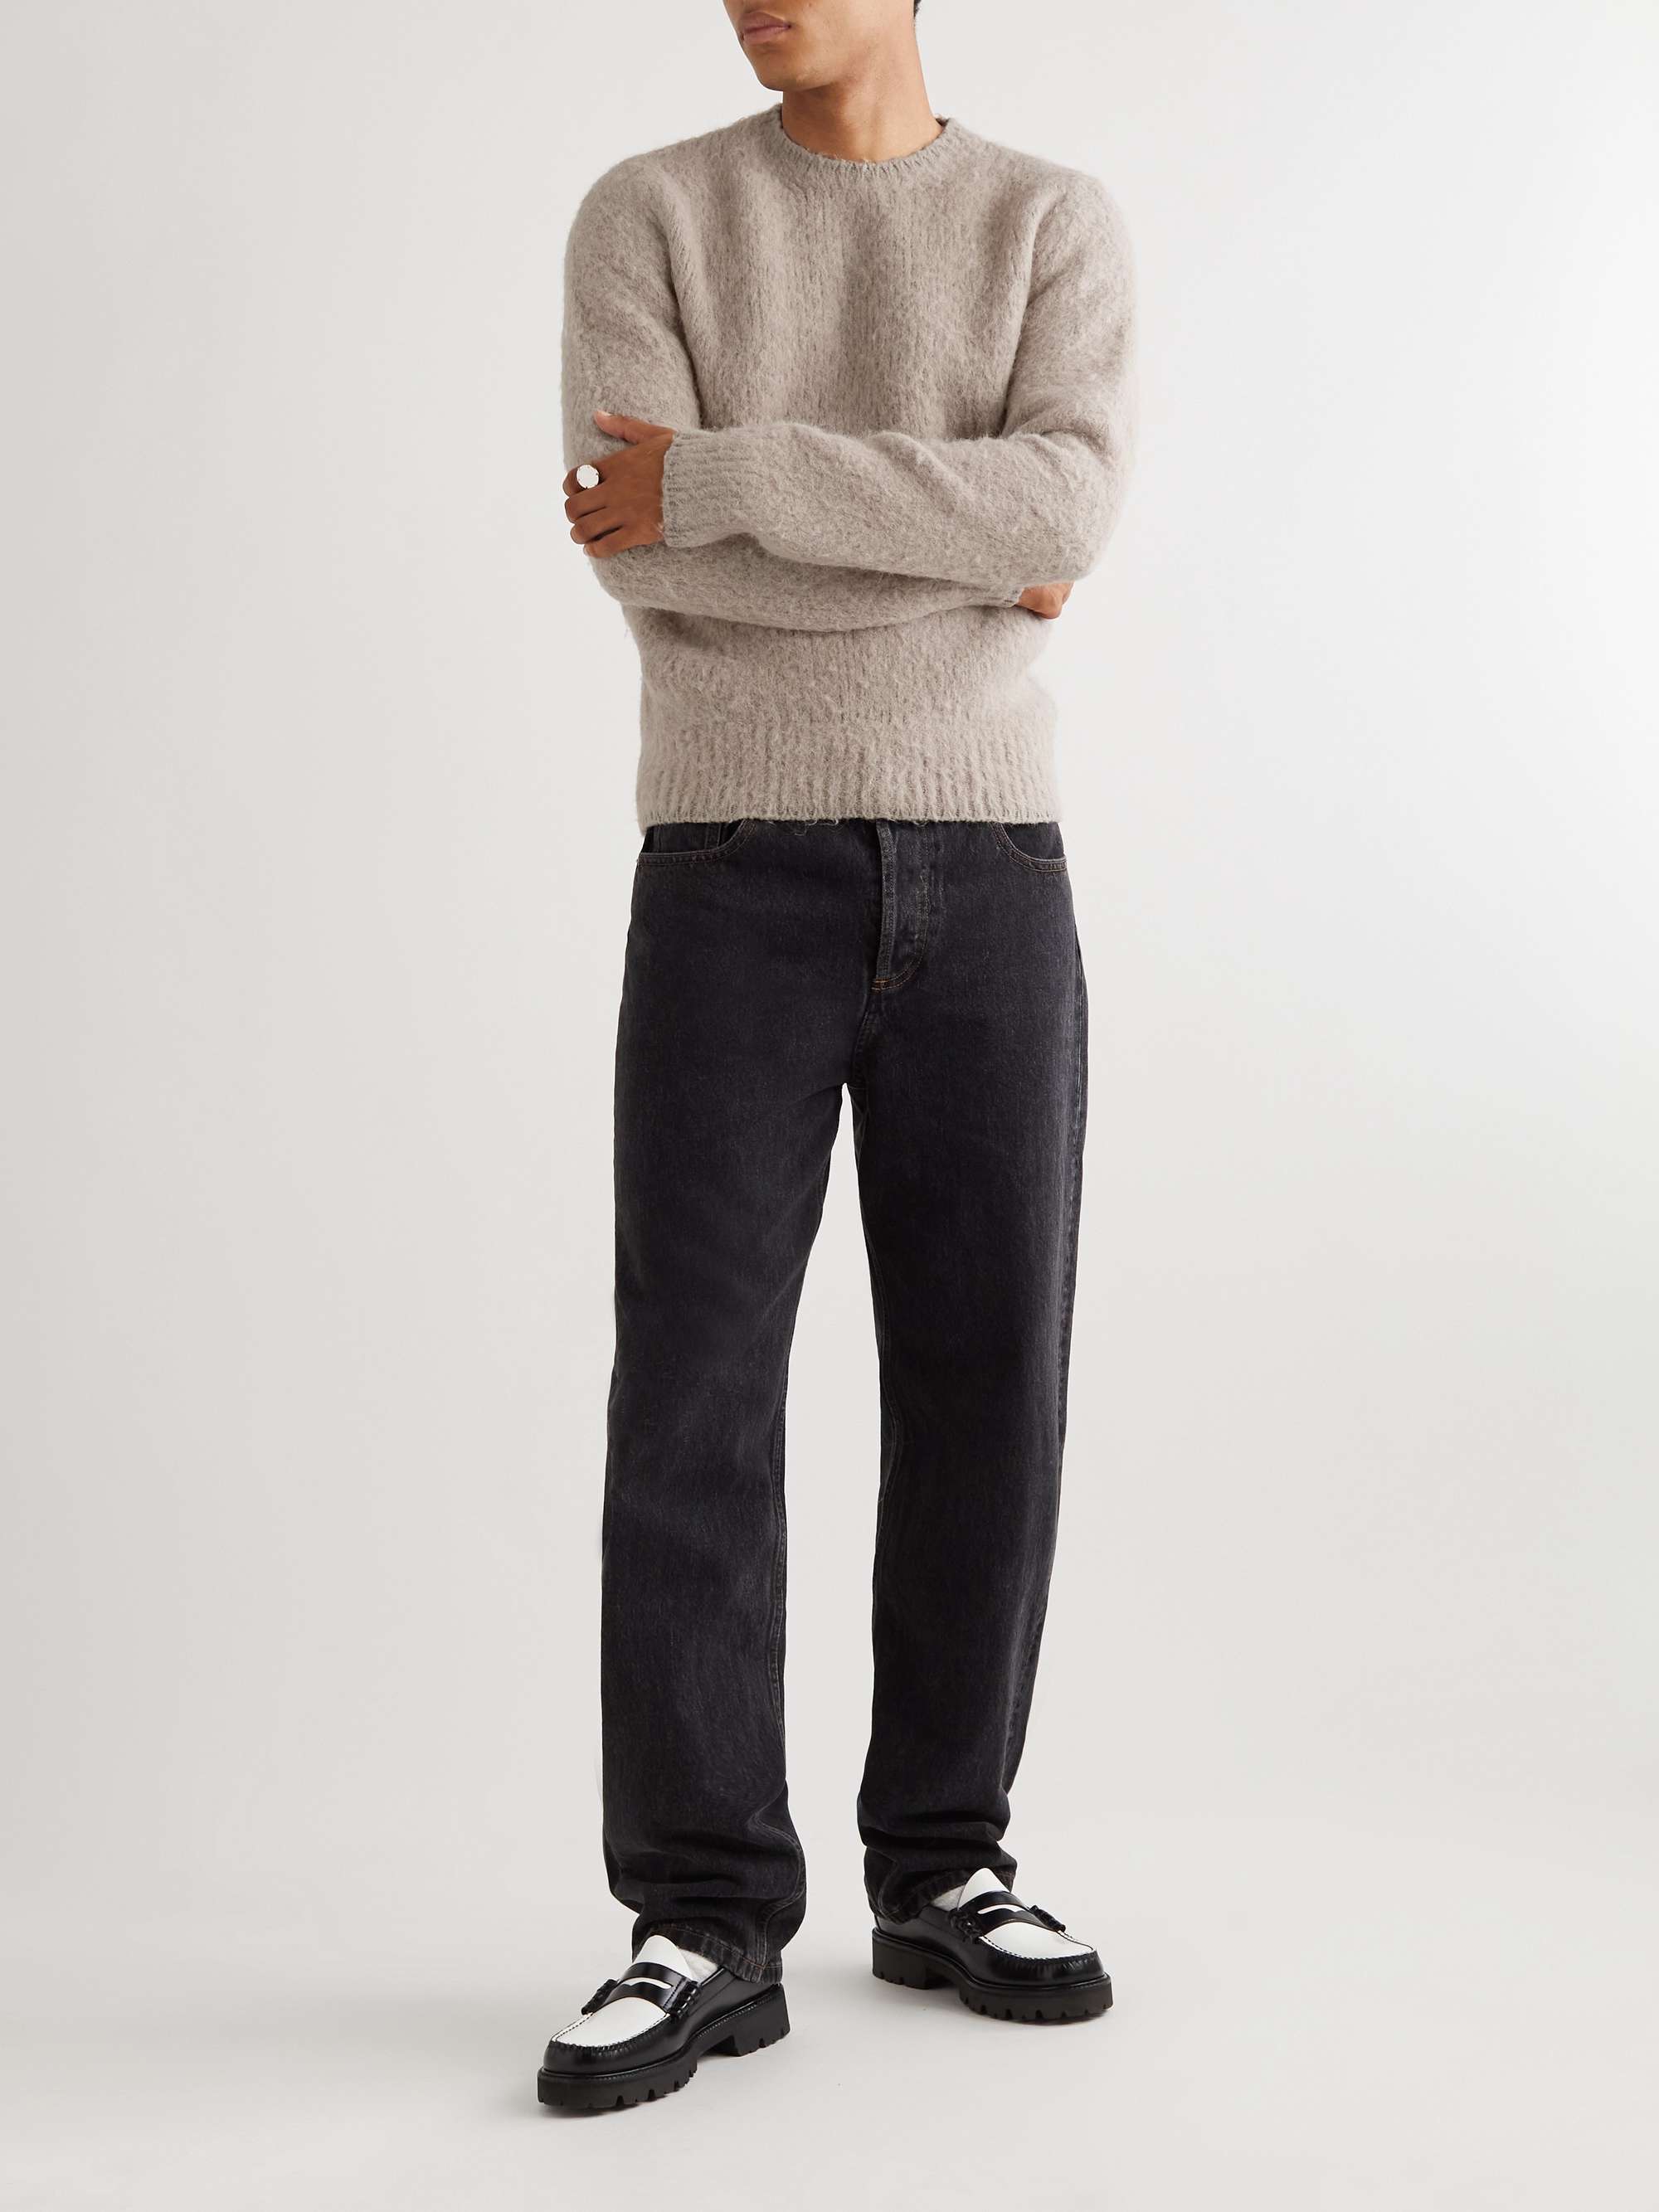 AMI PARIS Knitted Sweatshirt for Men | MR PORTER